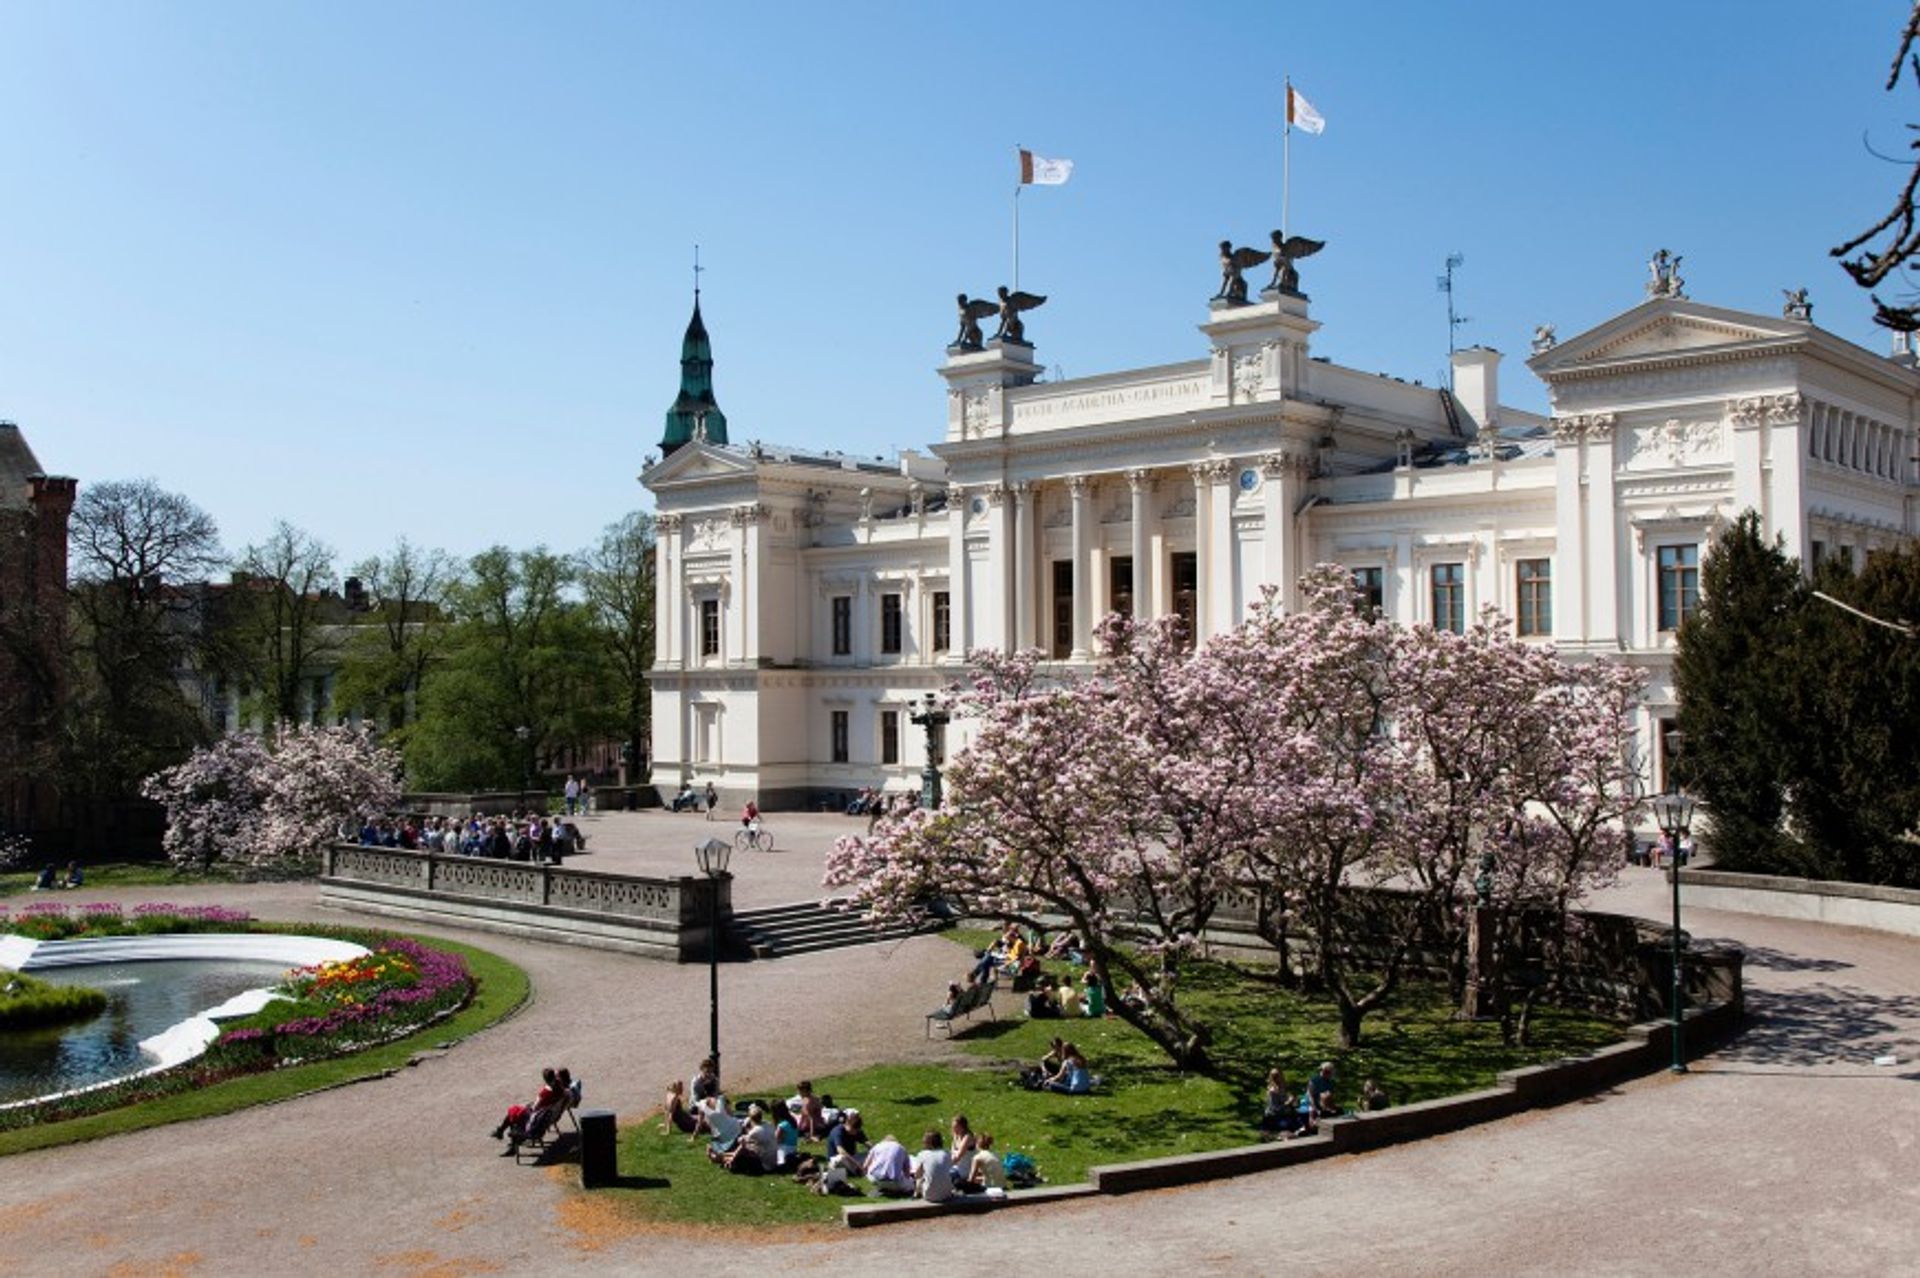 Lund University Global Scholarship Program